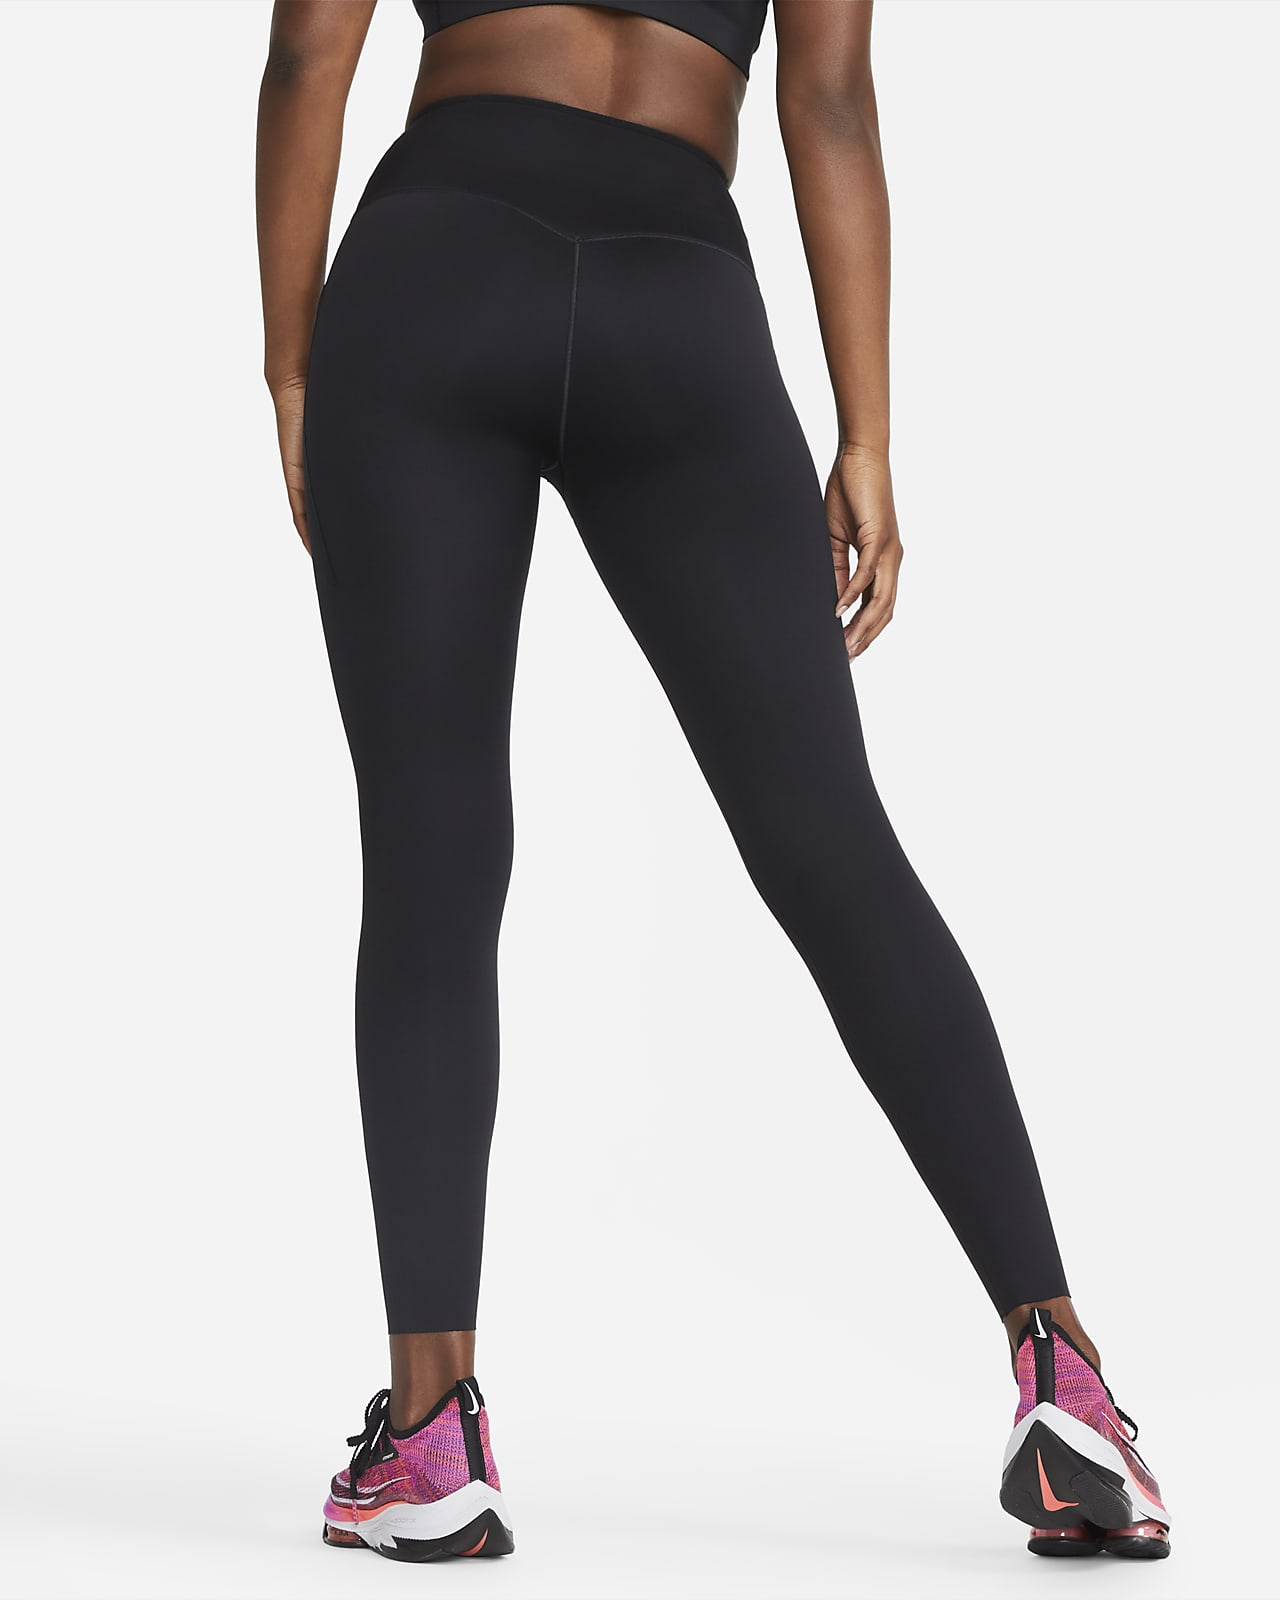 Nike Dri-FIT One Damen Leggings Plus Size DM9501-256 Jogging Archaeo Brown  3XL